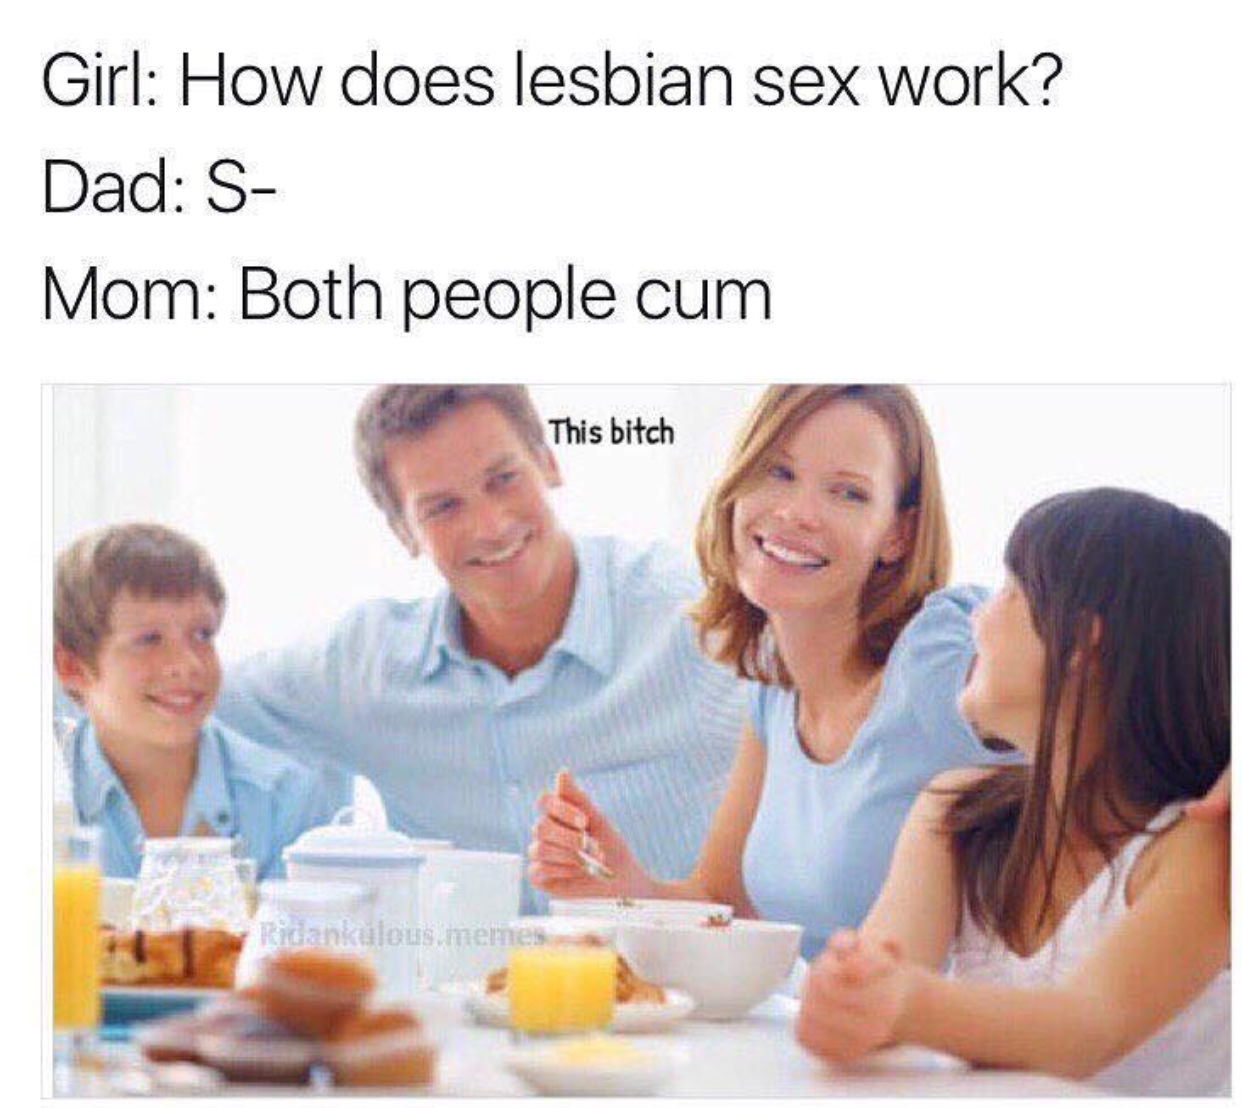 lesbian sex meme both people cum - Girl How does lesbian sex work? Dad S Mom Both people cum This bitch Ridankulous metres